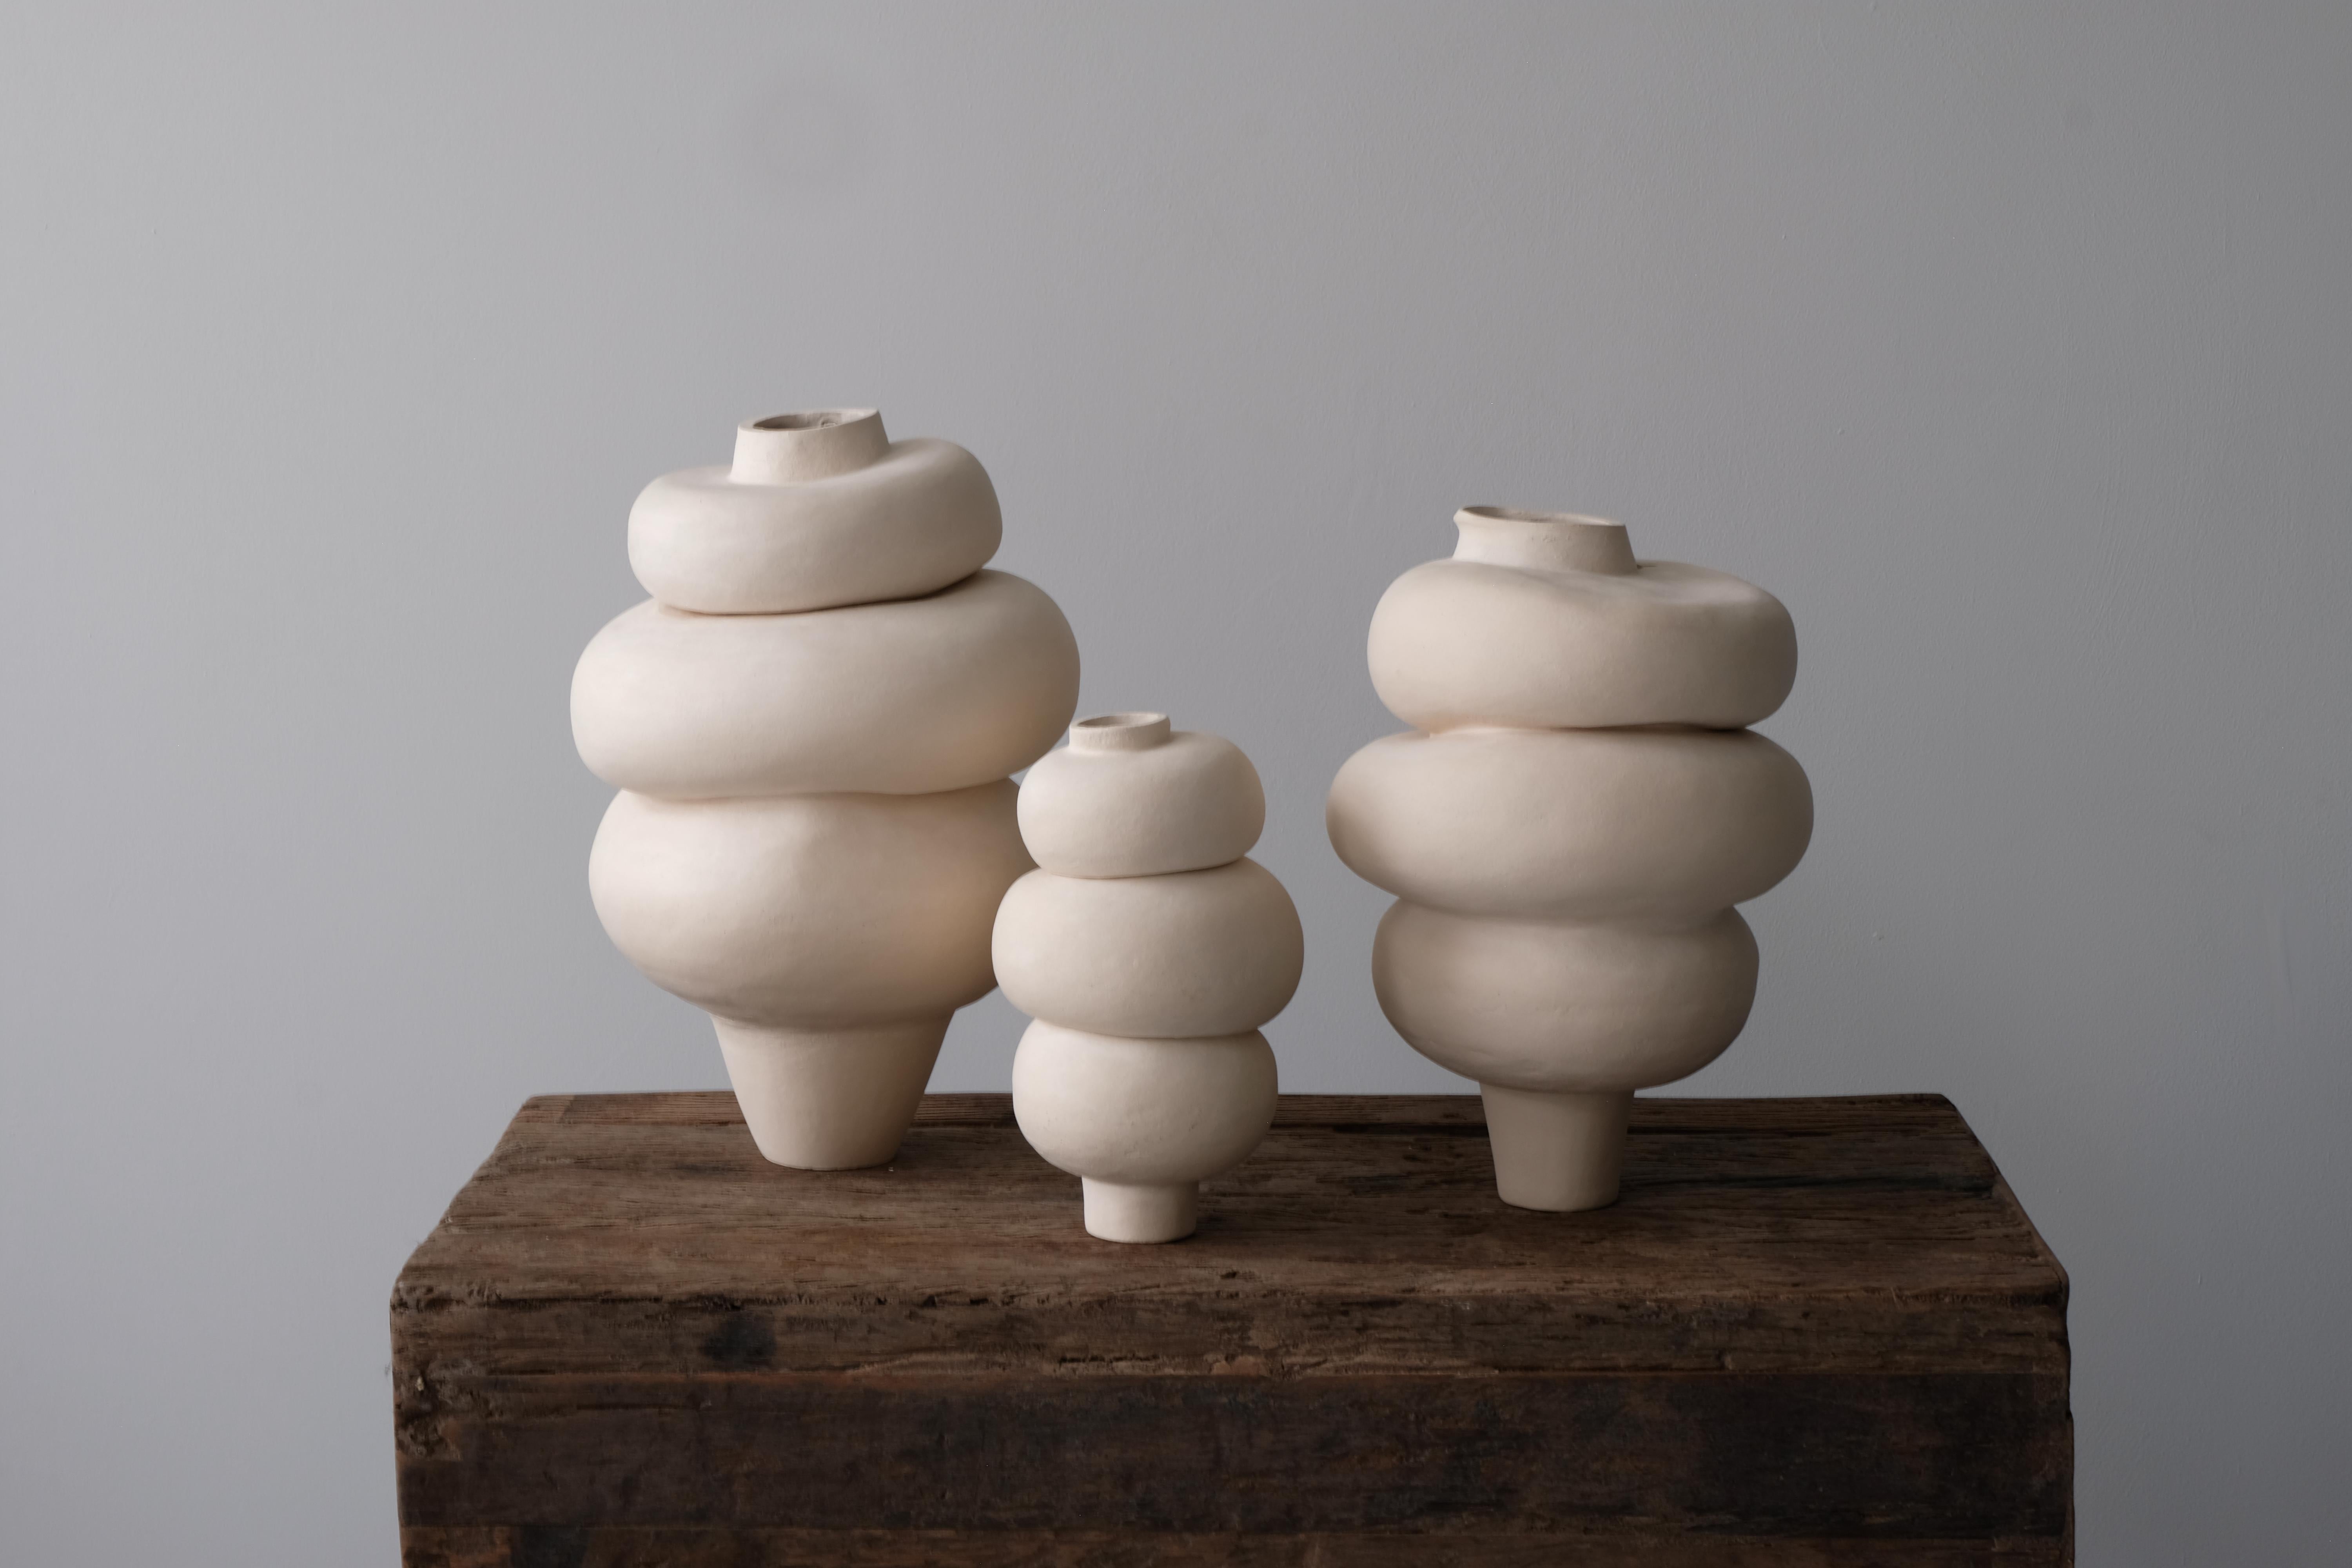 Dutch Contemporary Sculptural Ceramic Art Modder in Touch by Françoise Jeffrey For Sale 2